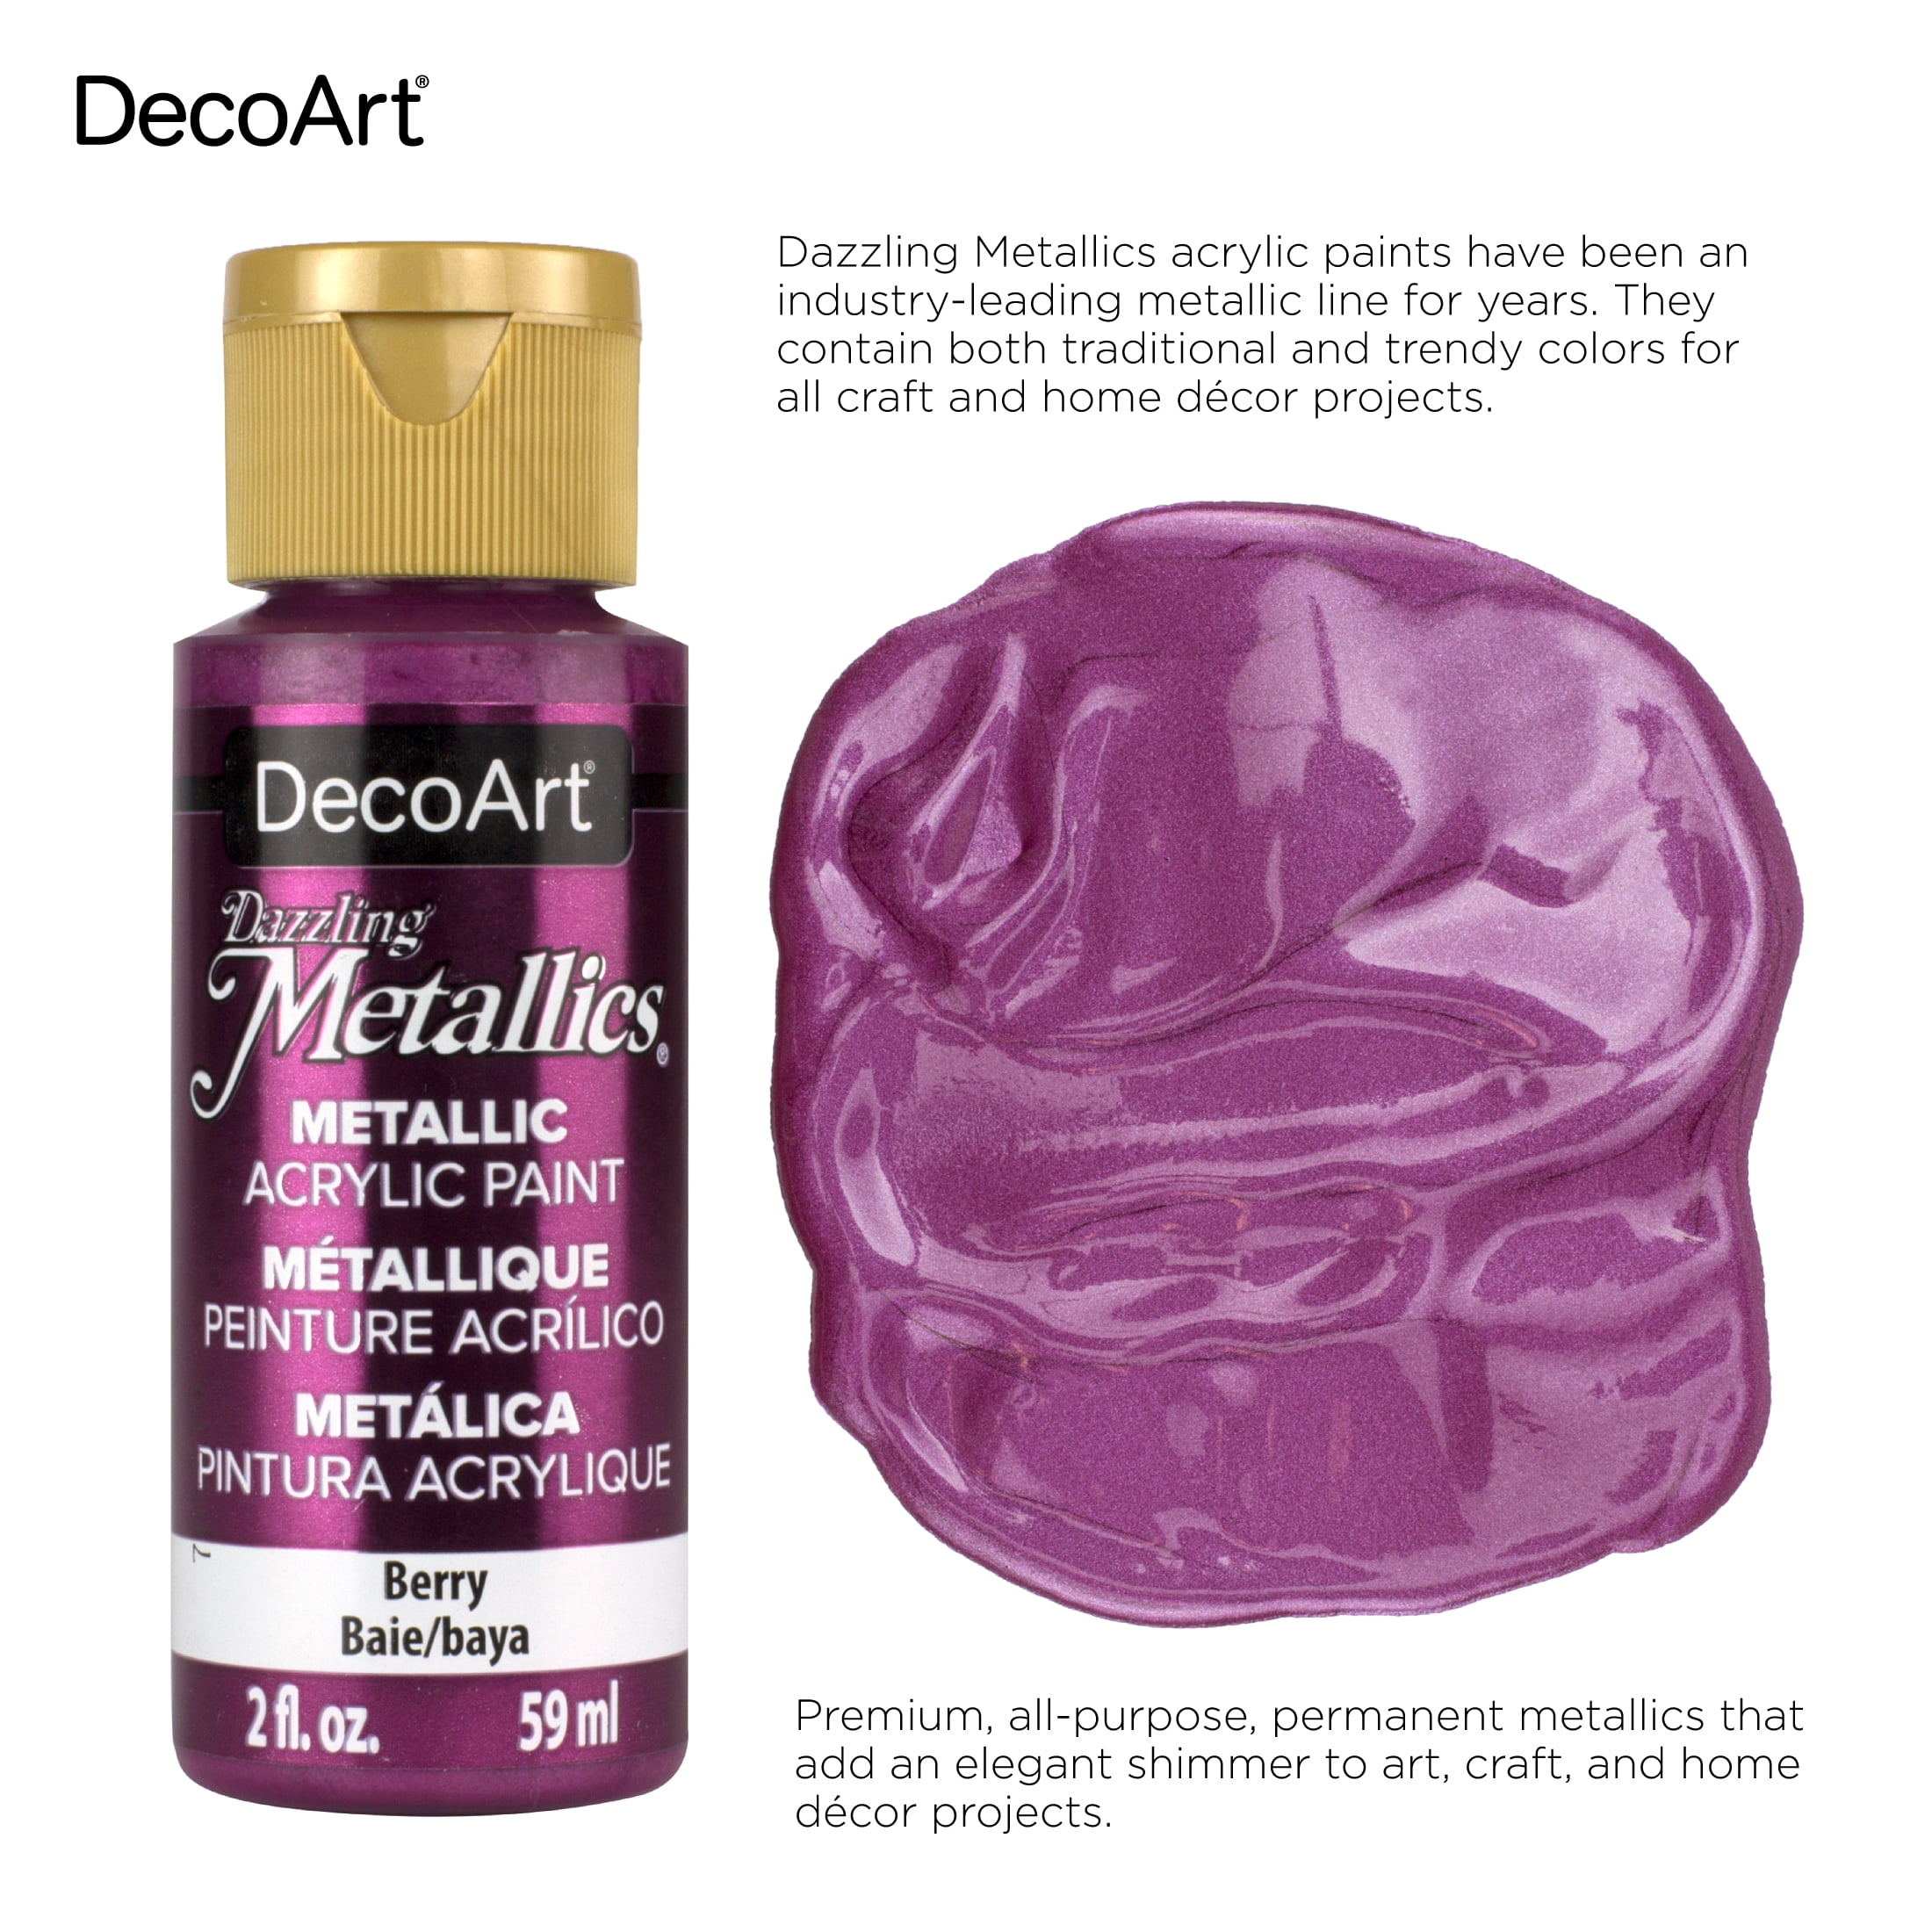 DecoArt Dazzling Metallics - 2 Ounce 4 Pack Glorious Gold Acrylic Paint Set  Gold Metallic Acrylic Paint Art Supplies- Art Projects, Home Decor- E-book